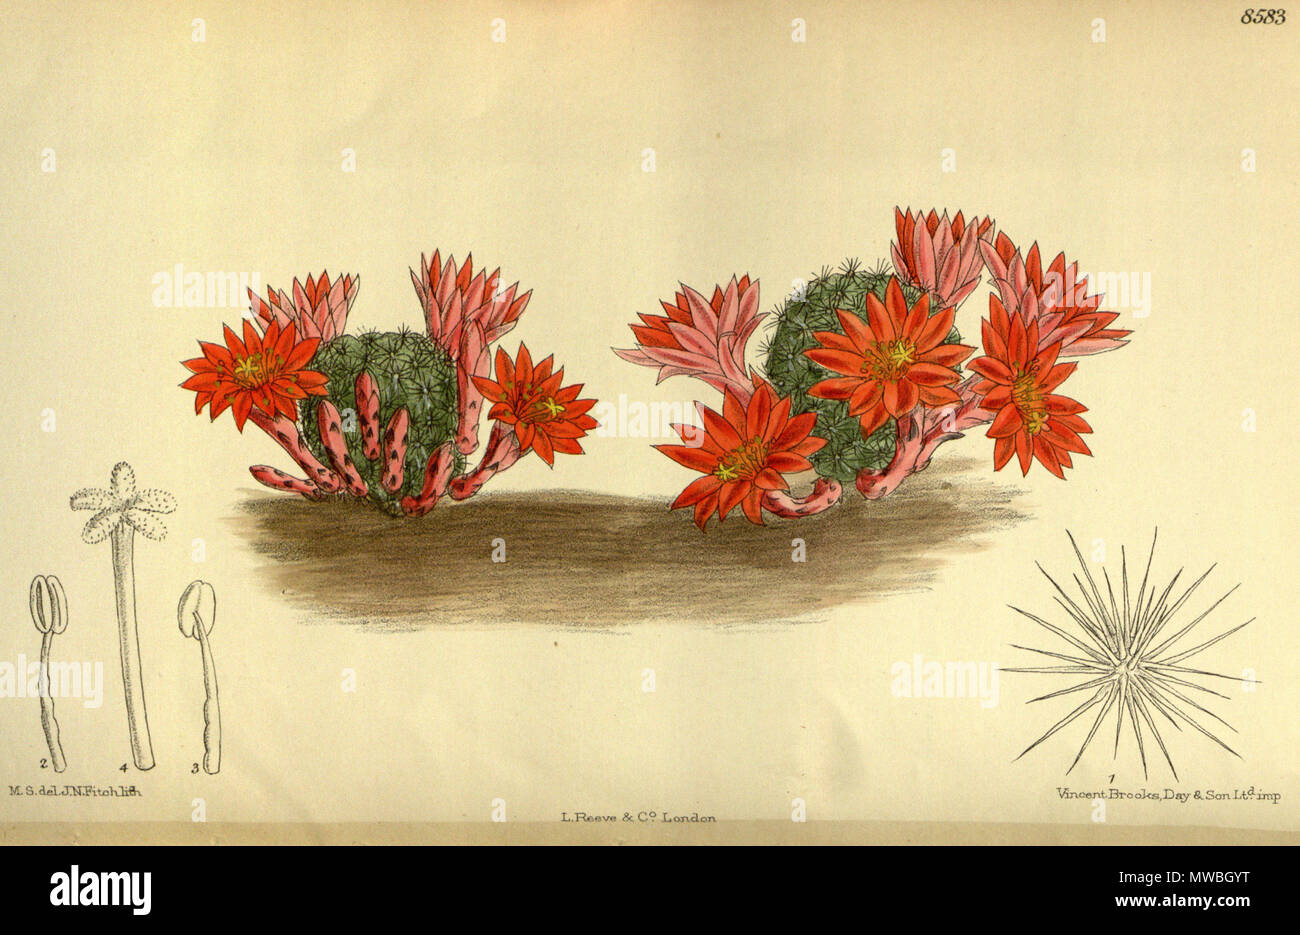 . Echinocactus minusculus (= Rebutia minuscula), Cactaceae . 1914. M.S. del., J.N.Fitch lith. 176 Echinocactus minusculus 140-8583 Stock Photo